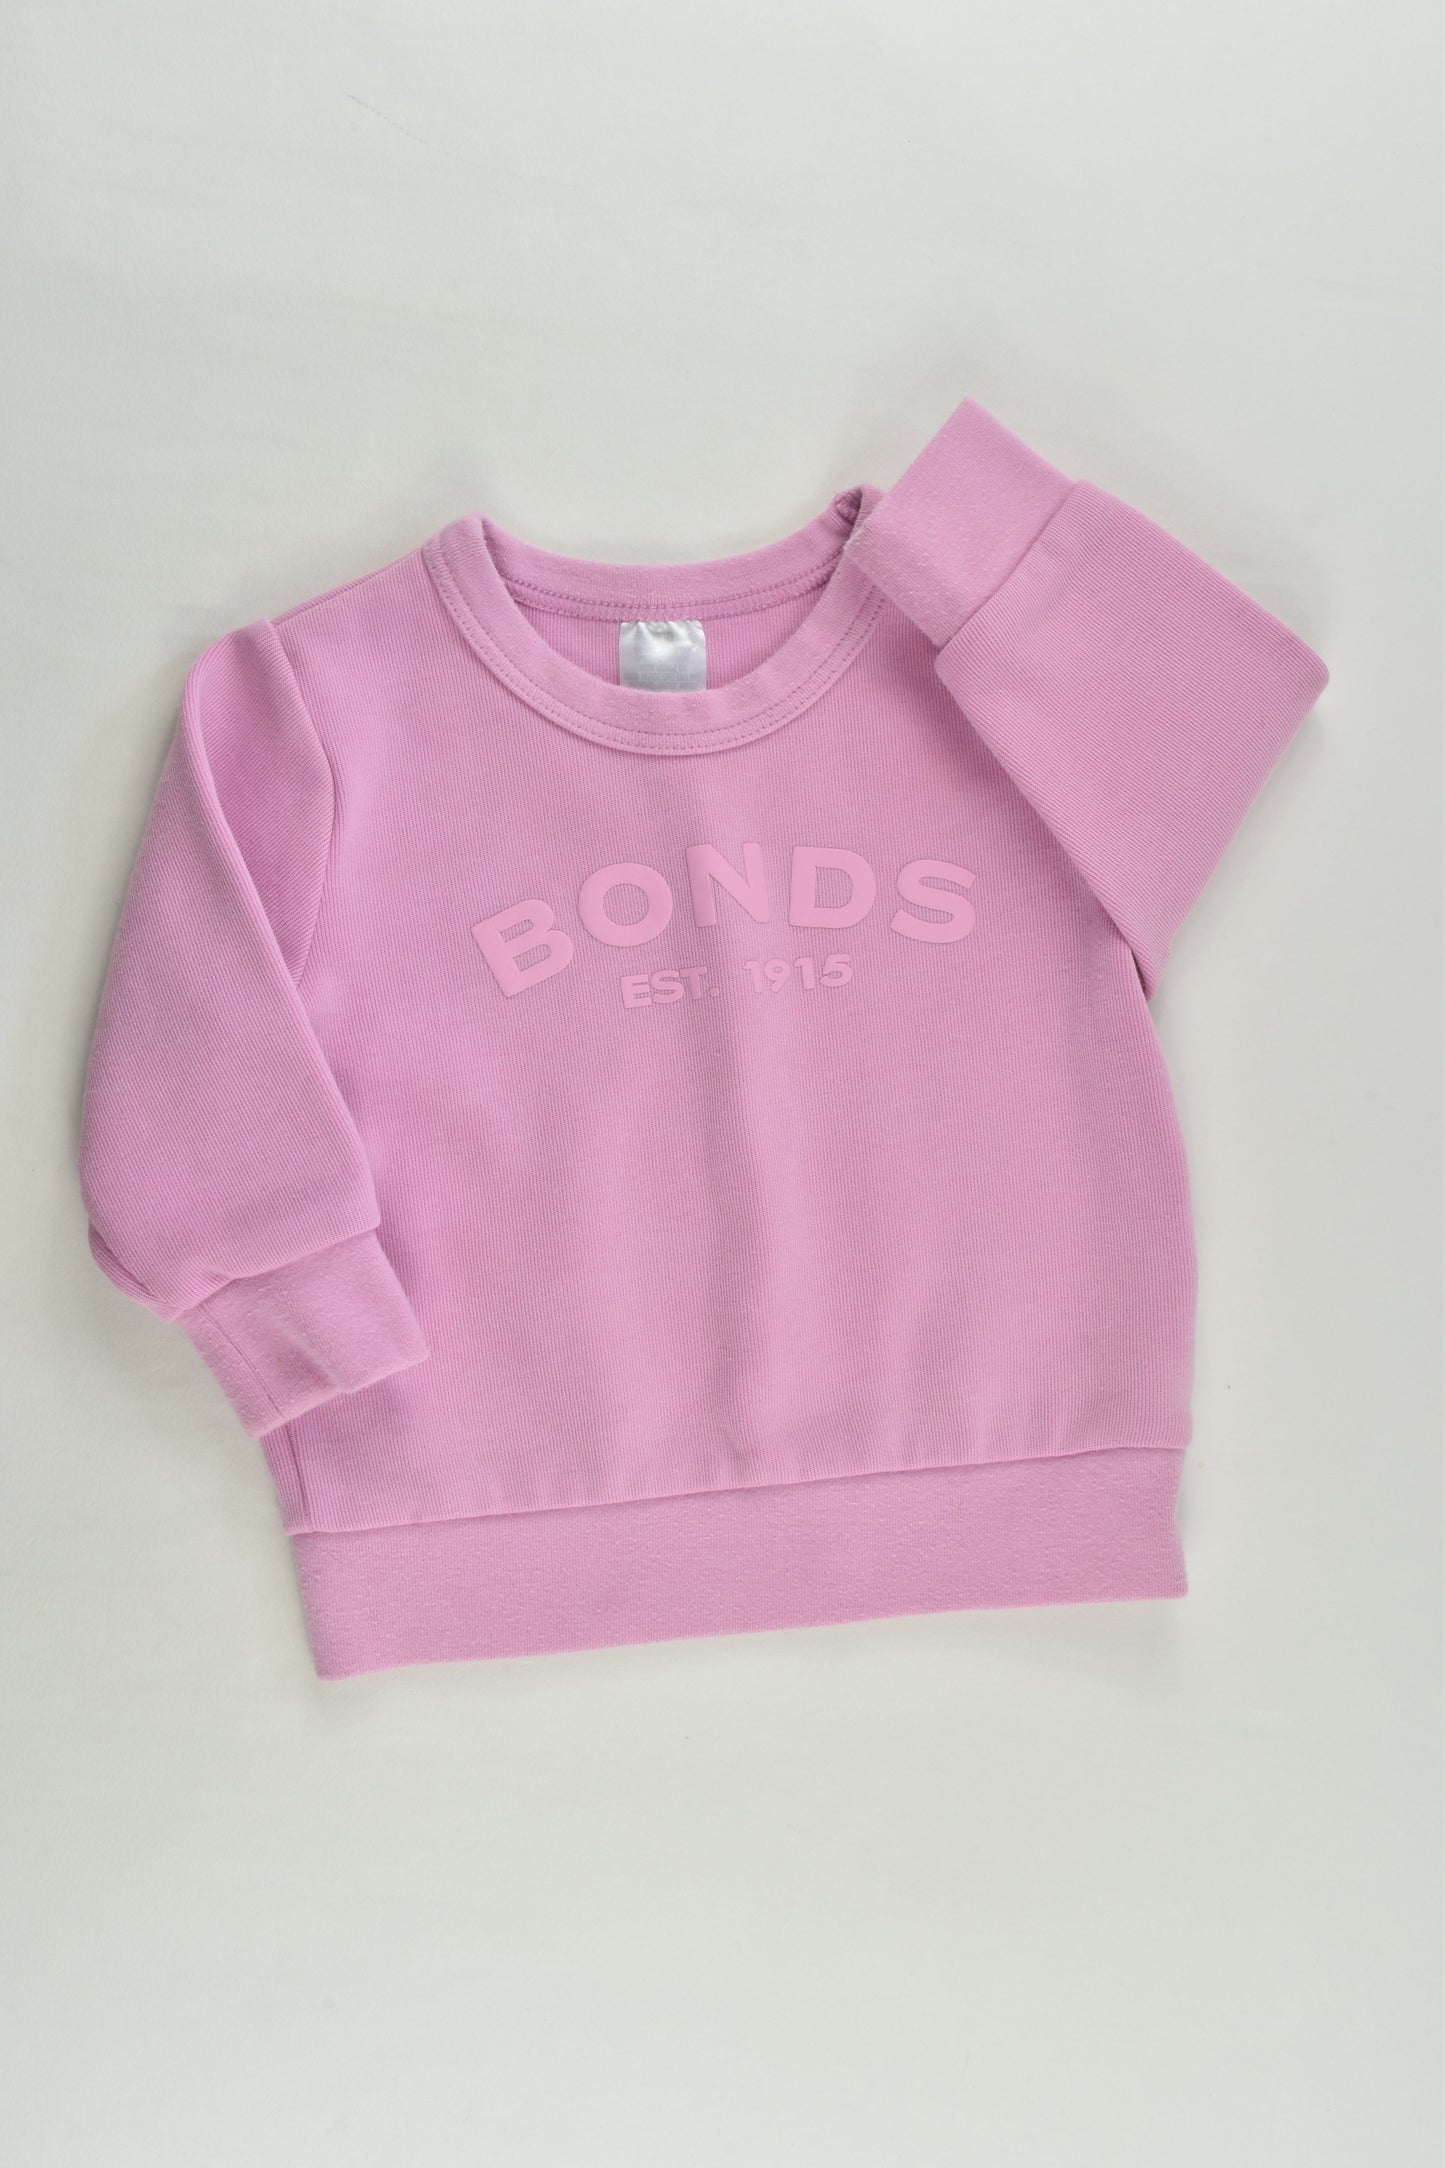 Bonds Size 00 Pink Sweater